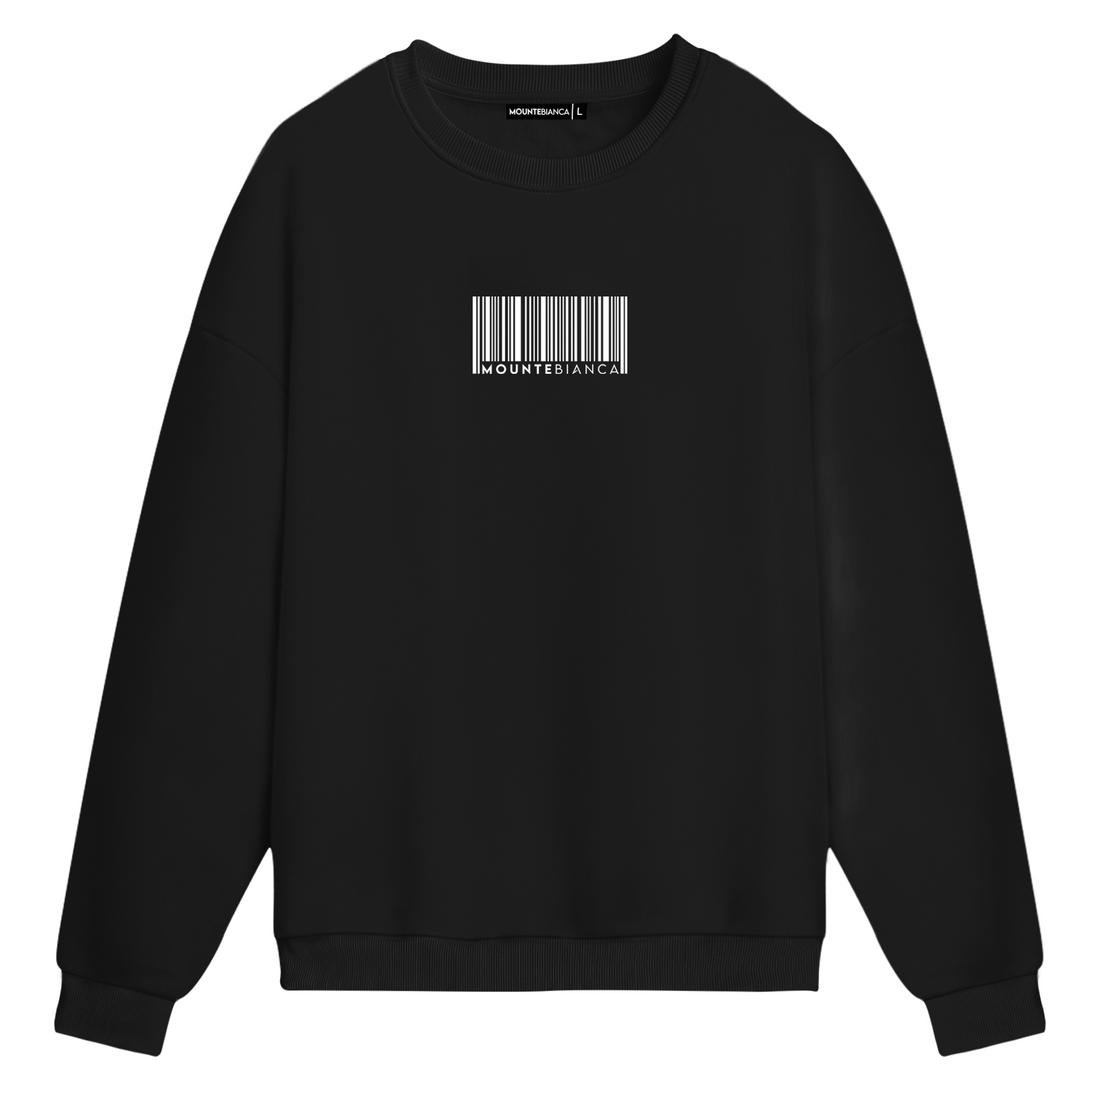 Barcod - Sweatshirt